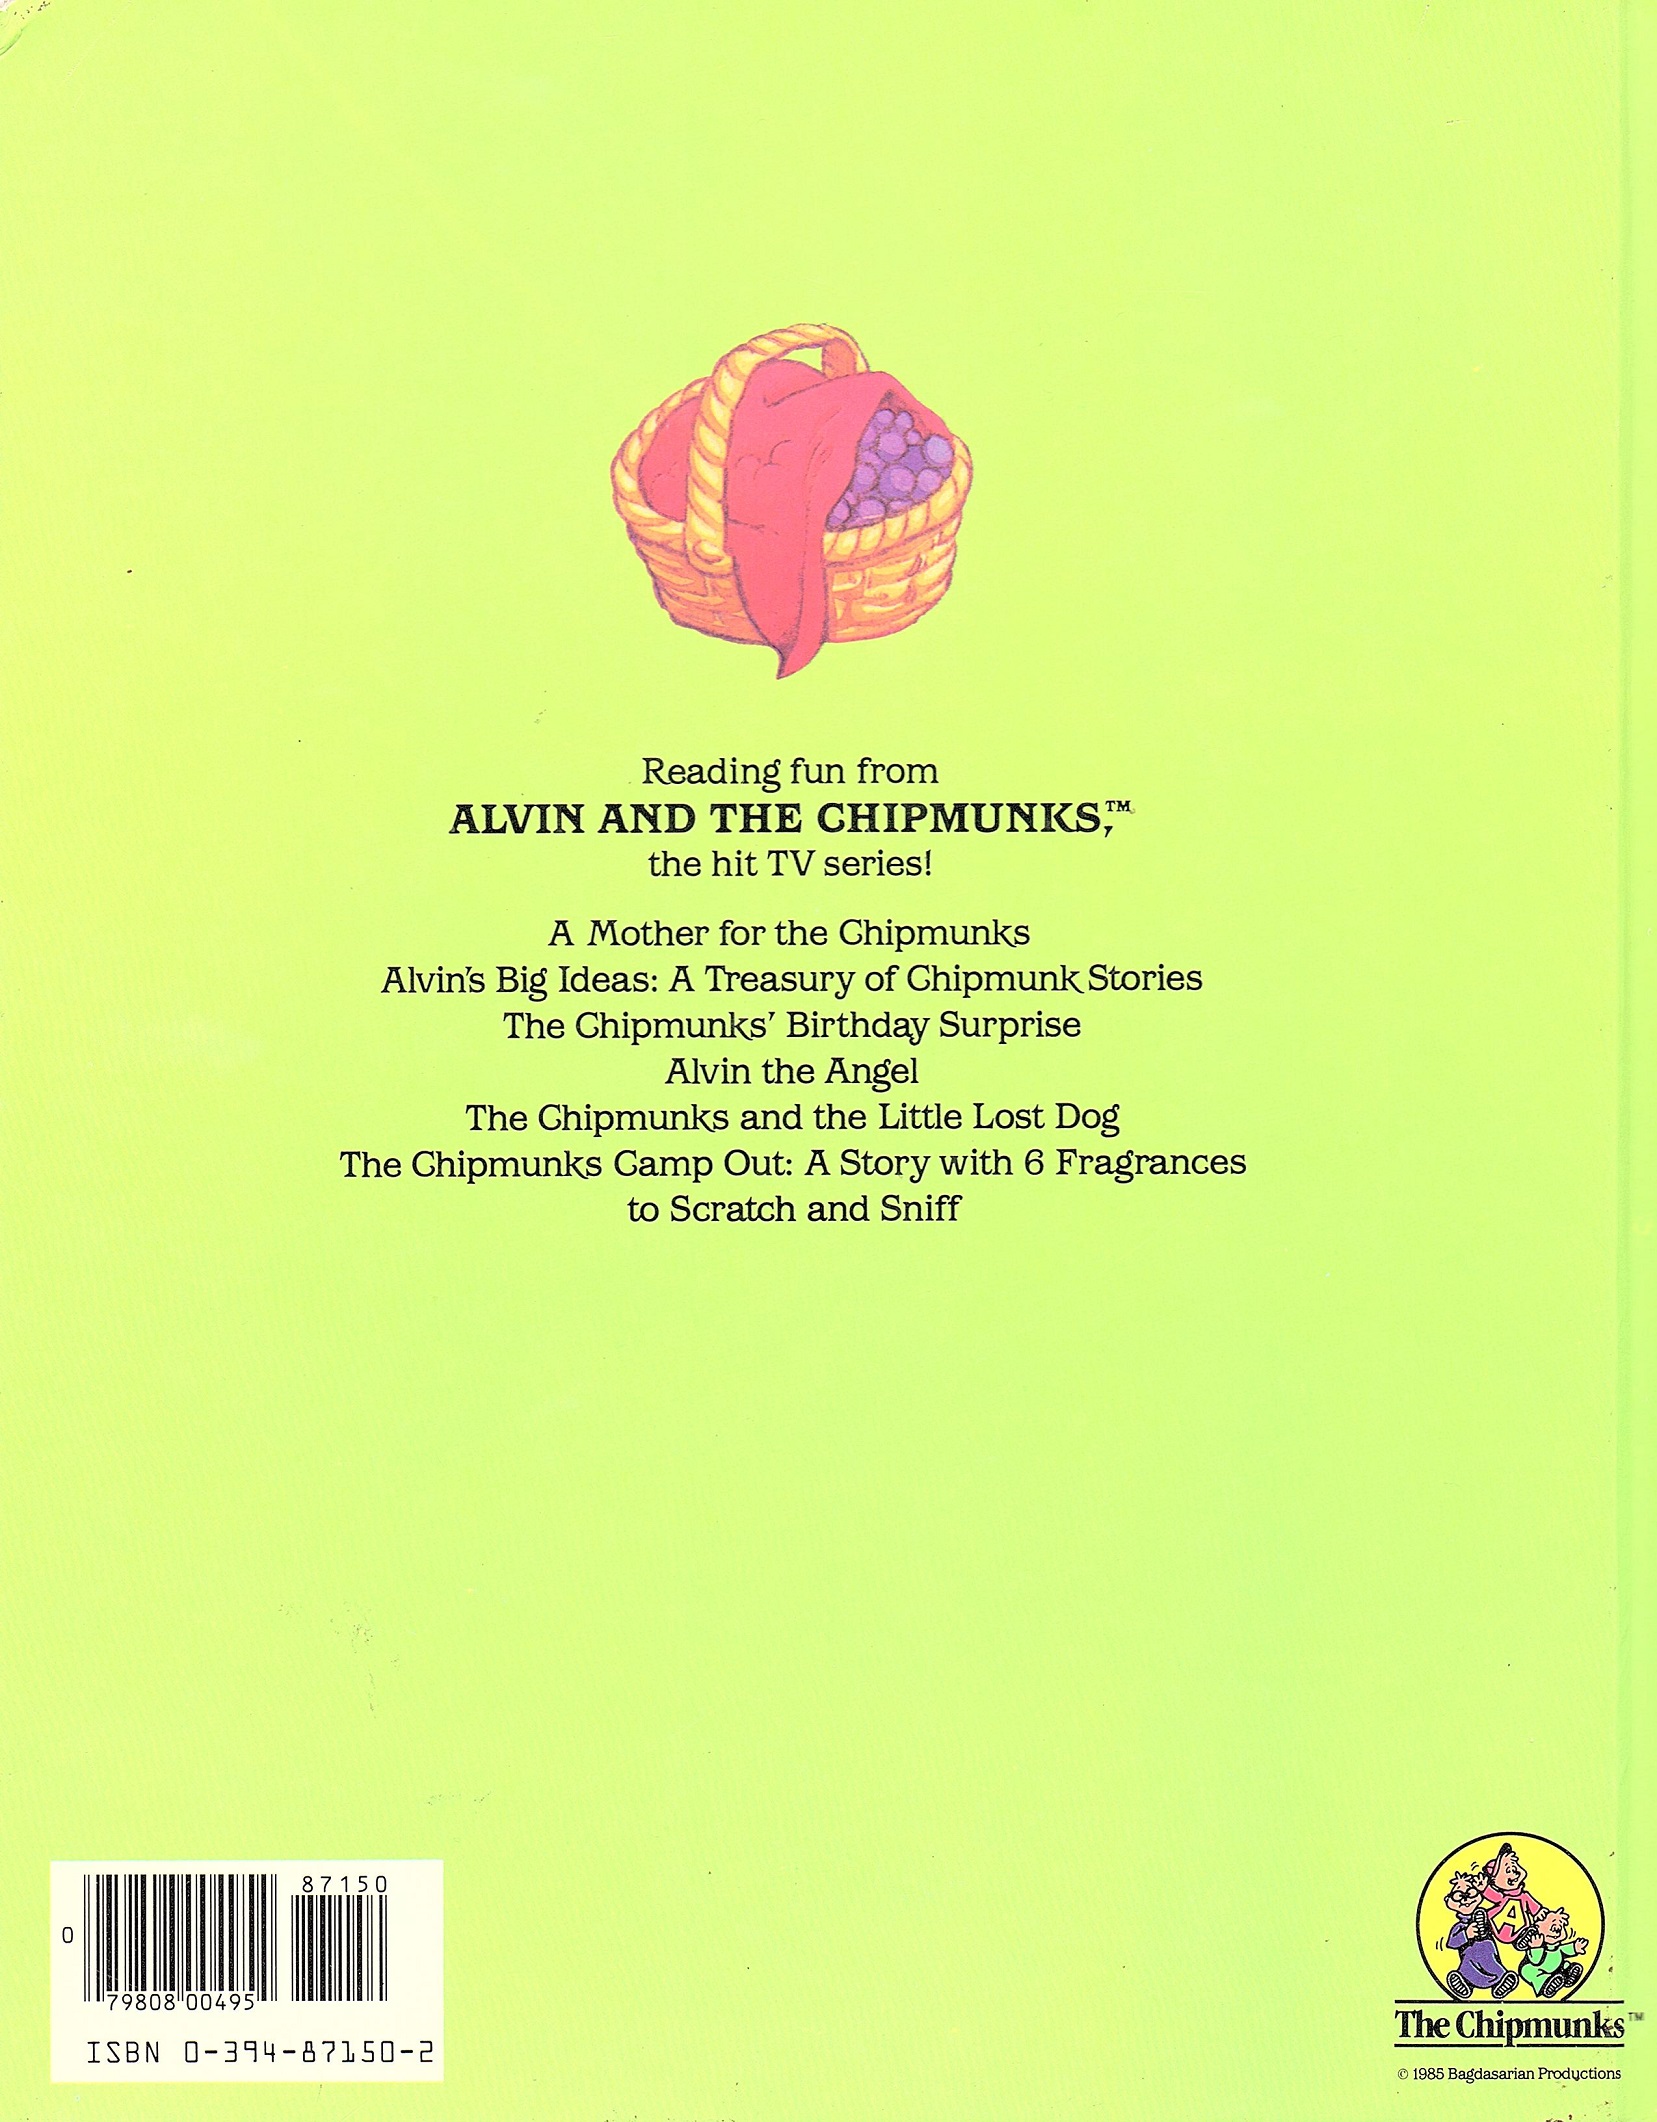 Alvin and the Chipmunks: The Junior Novel